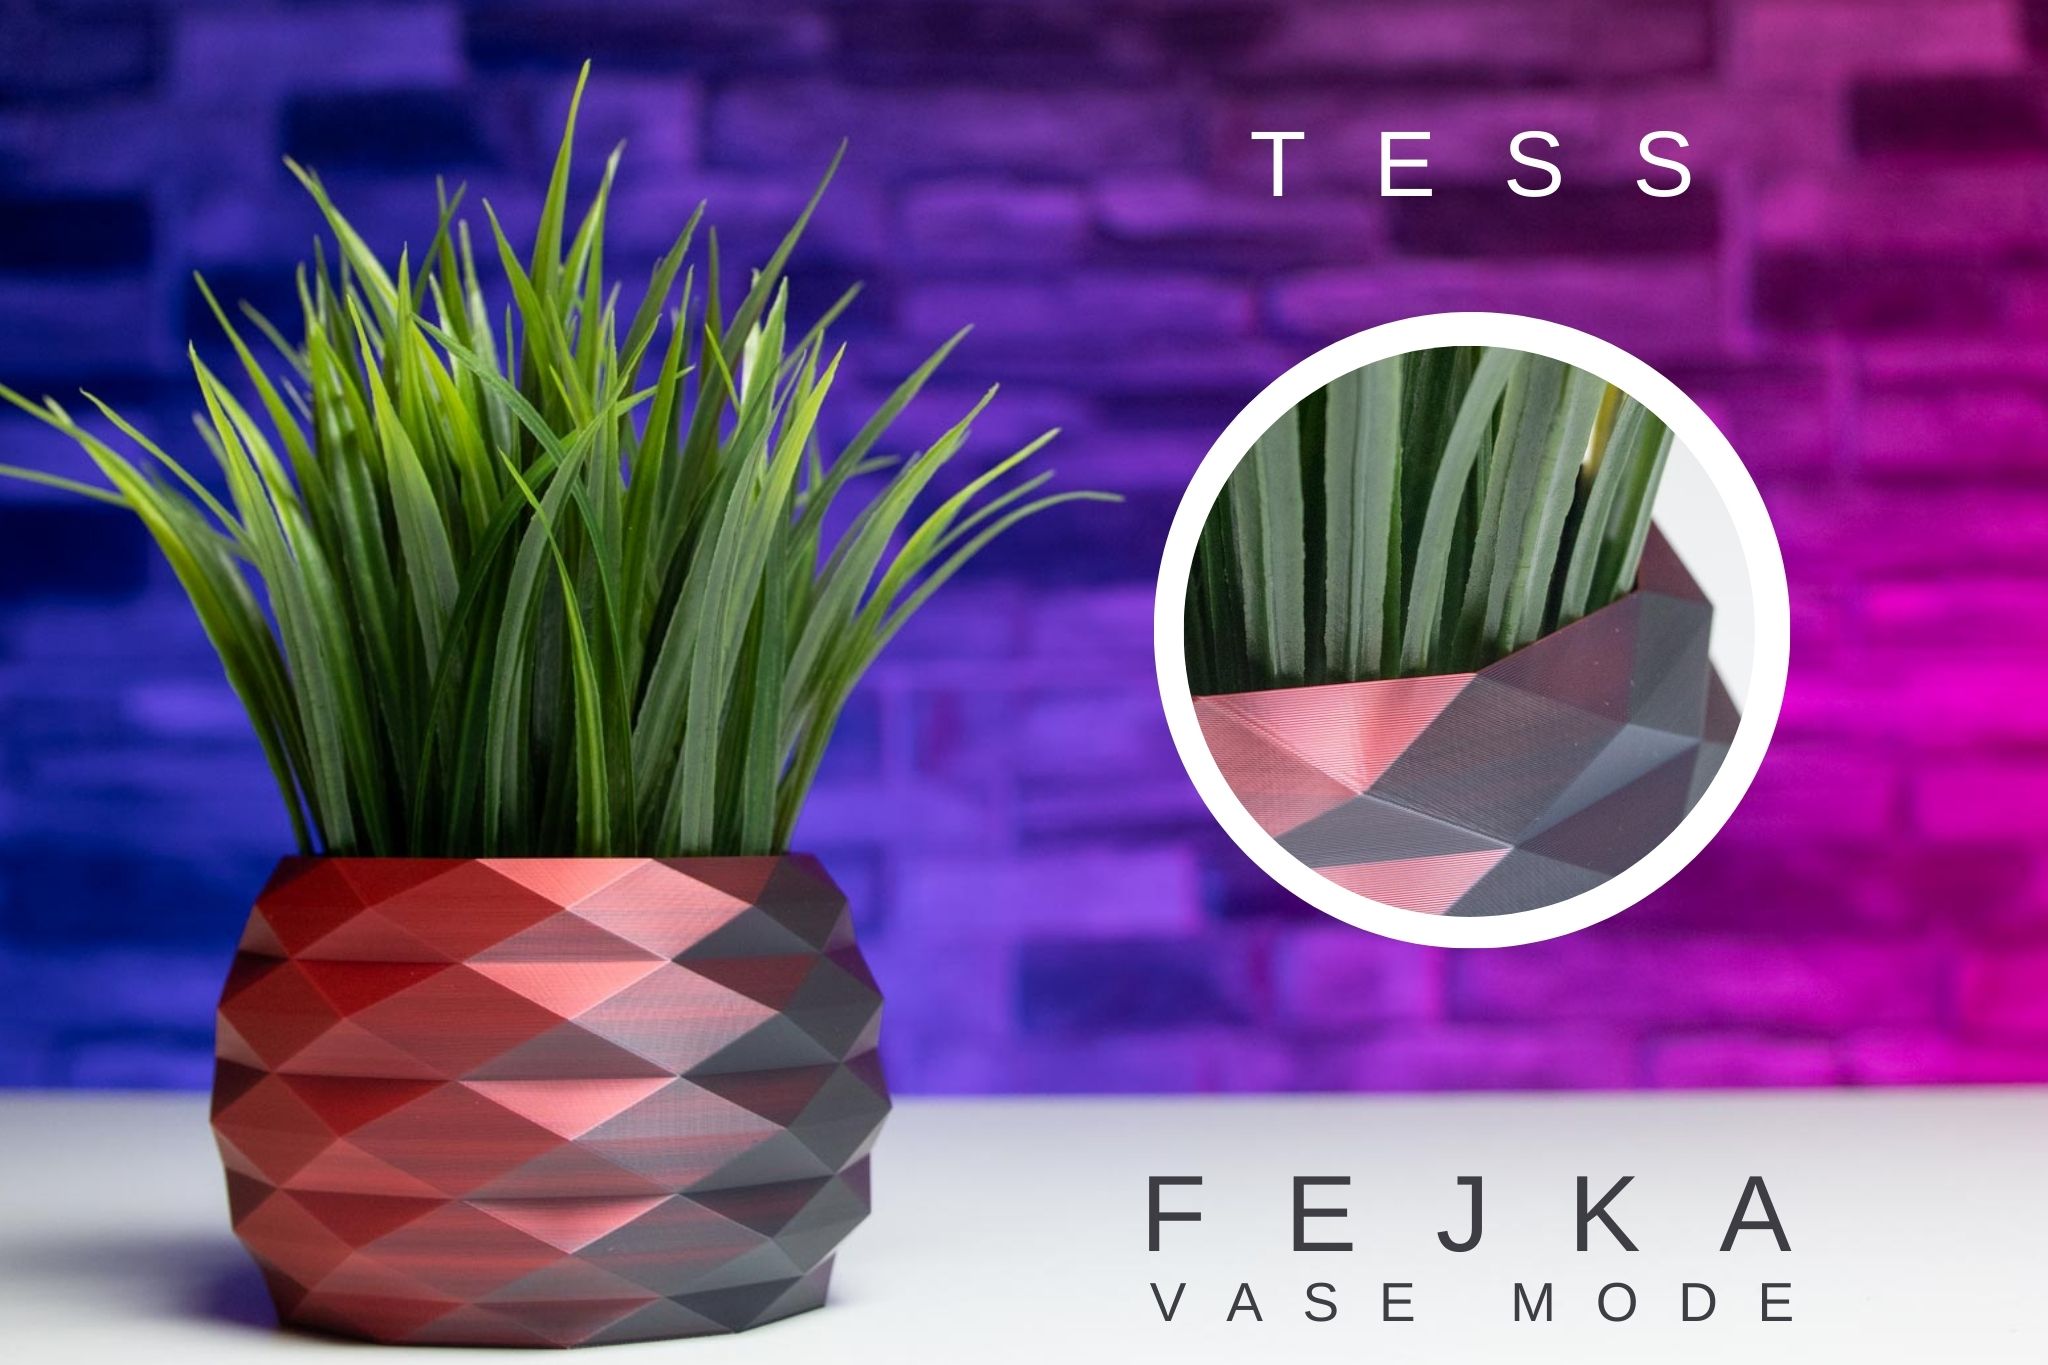 3D Printed Planter and Pot for Ikea Fejka - Vase TESS